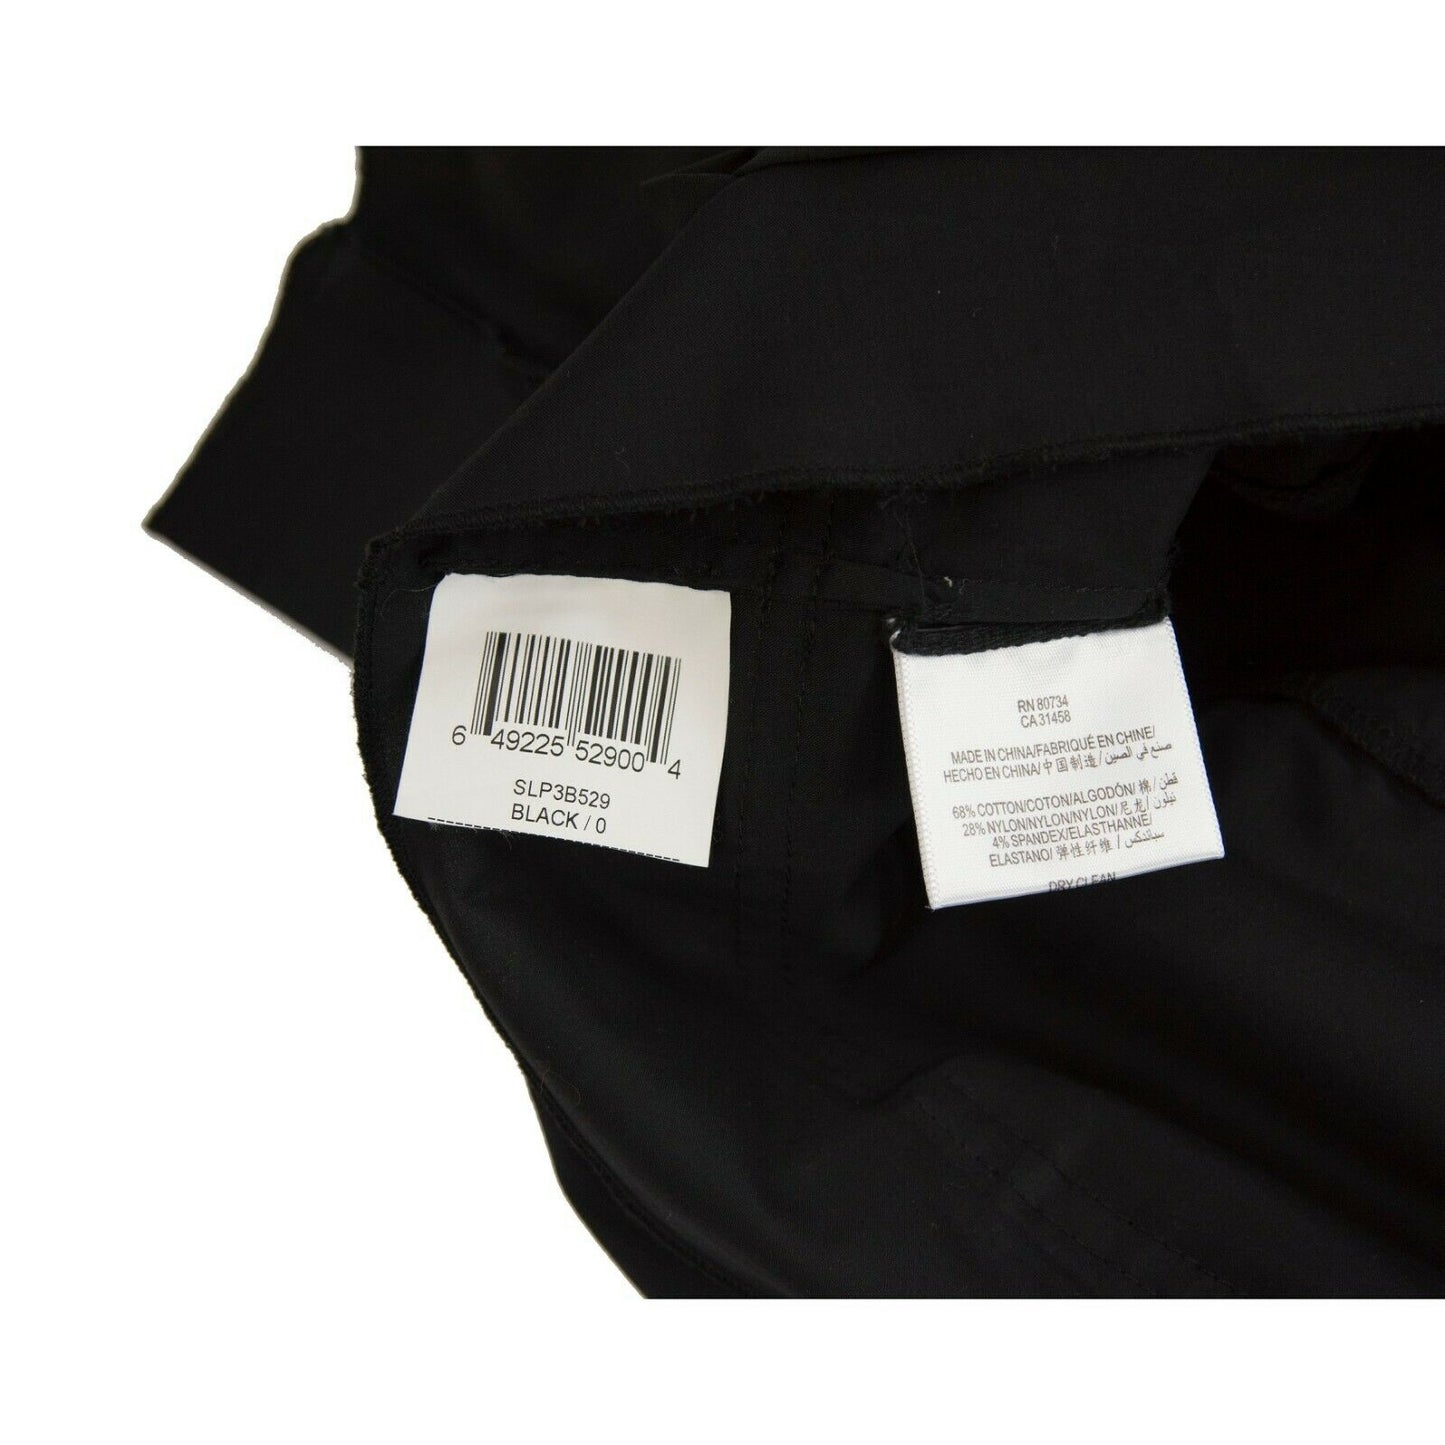 BCBGMaxAzria black Cotton Blend Layered A-Line Mini Skirt Size 0